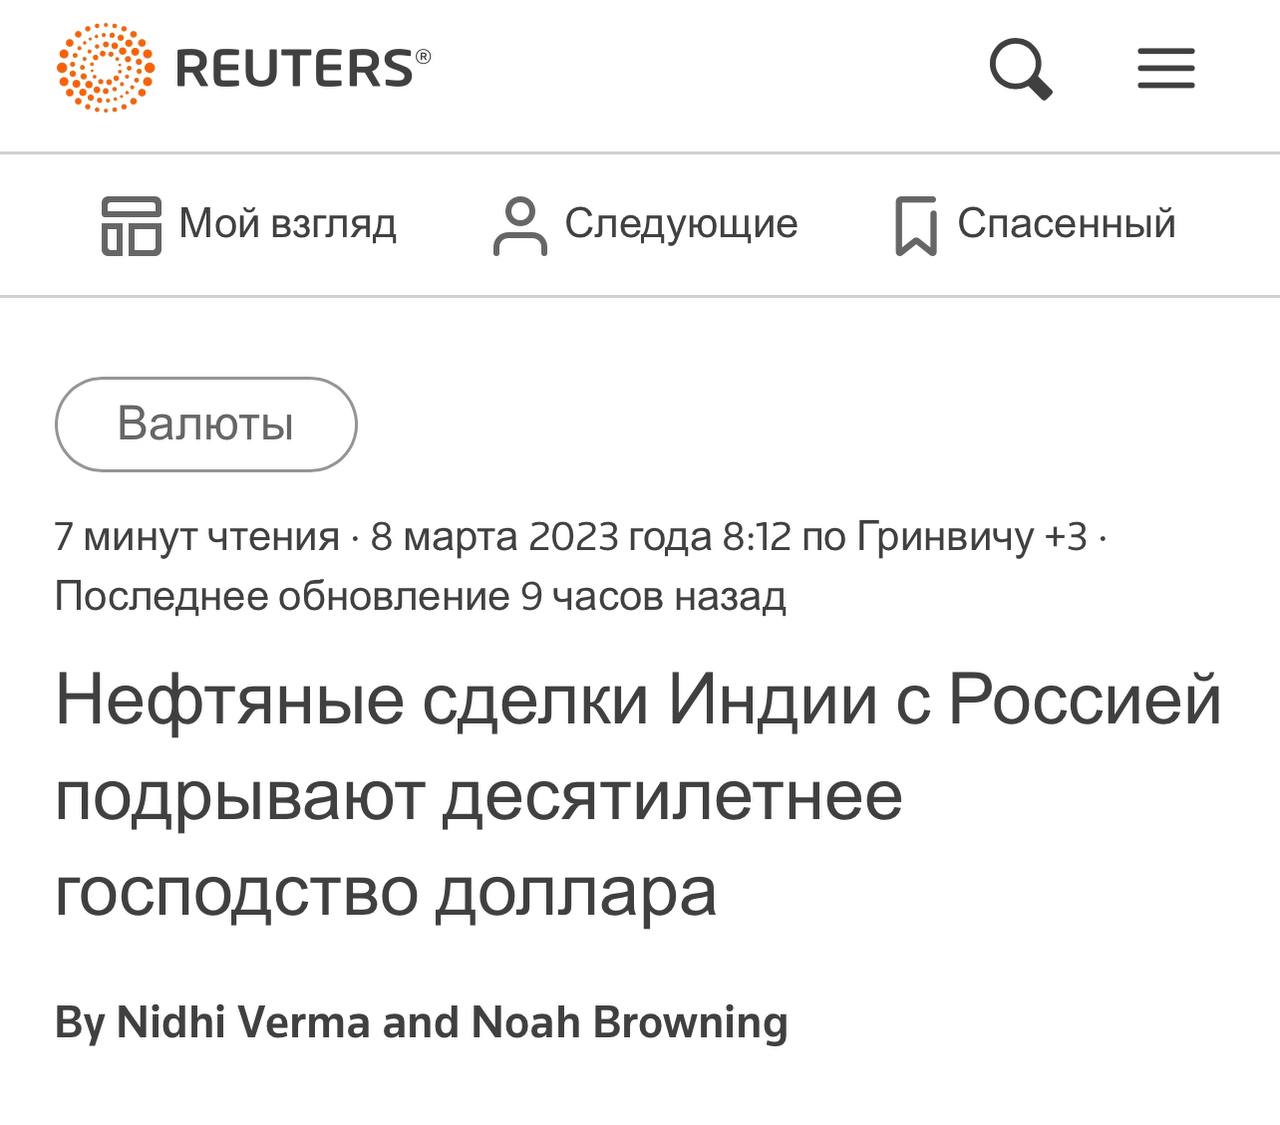 Reuters info